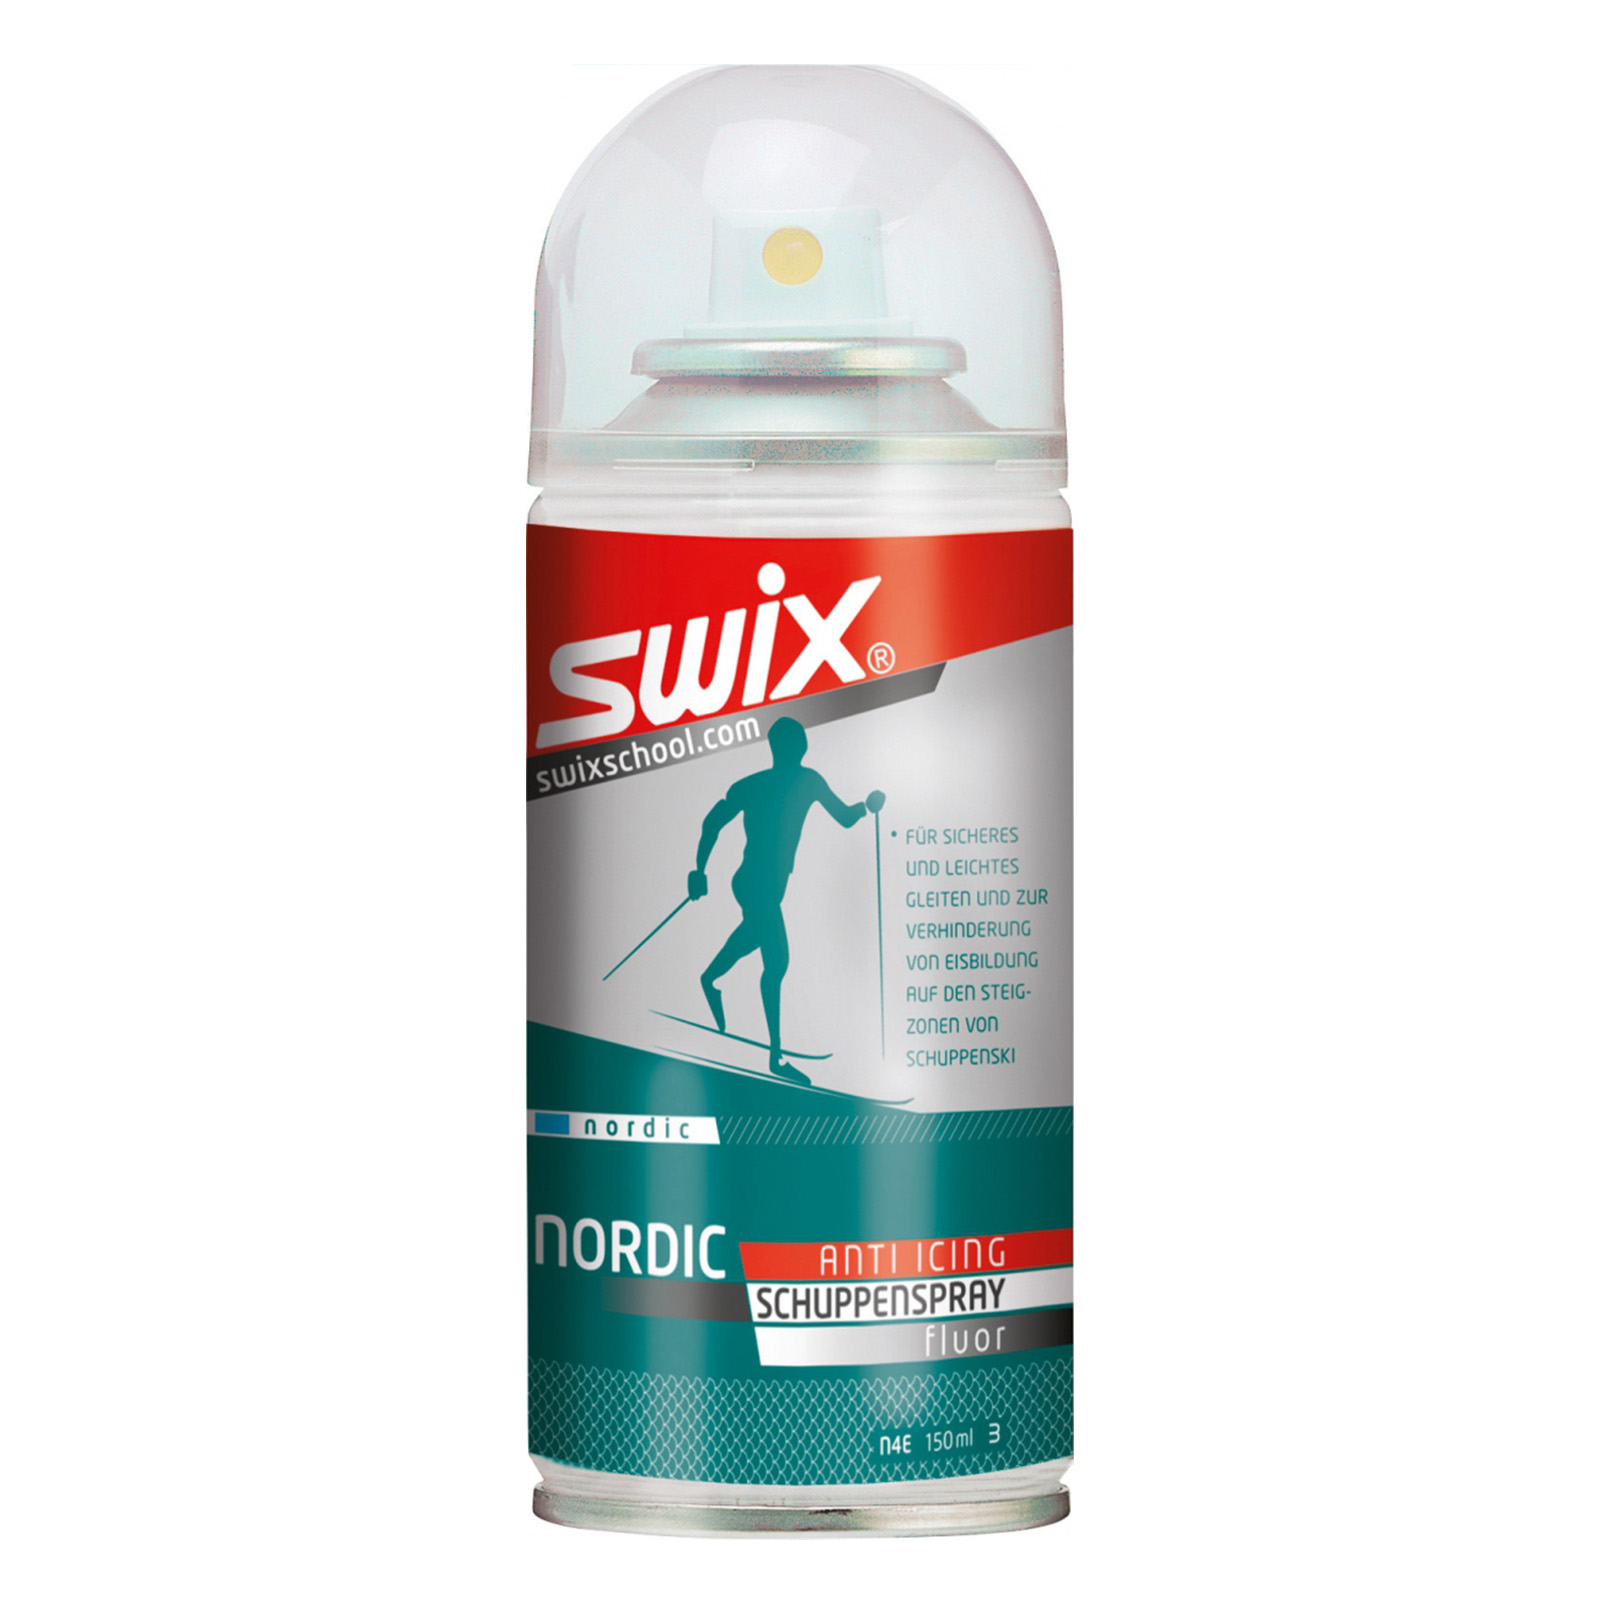 Swix Nordic Schuppen Spray , 150ml